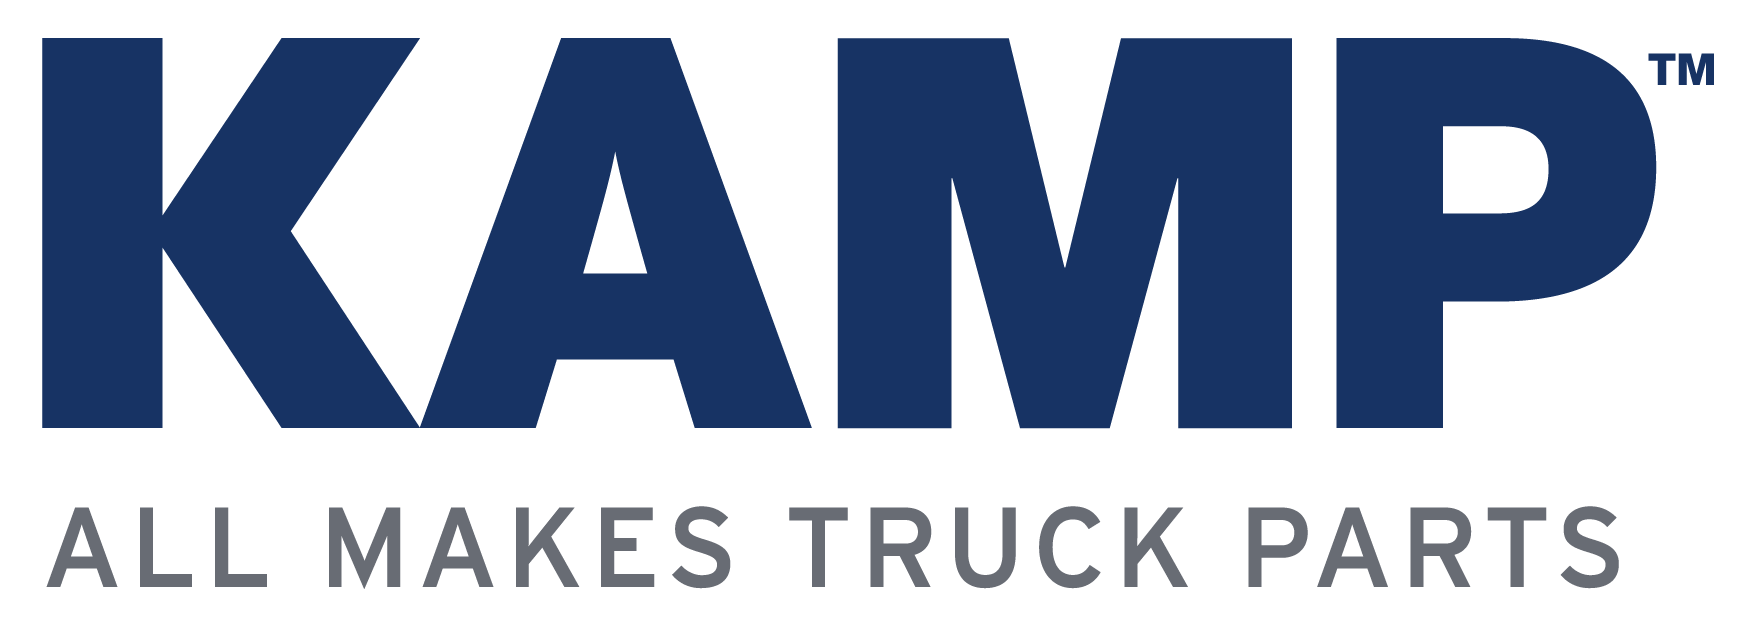 Kamp All Makes Truck Parts - Kriete Truck Centers